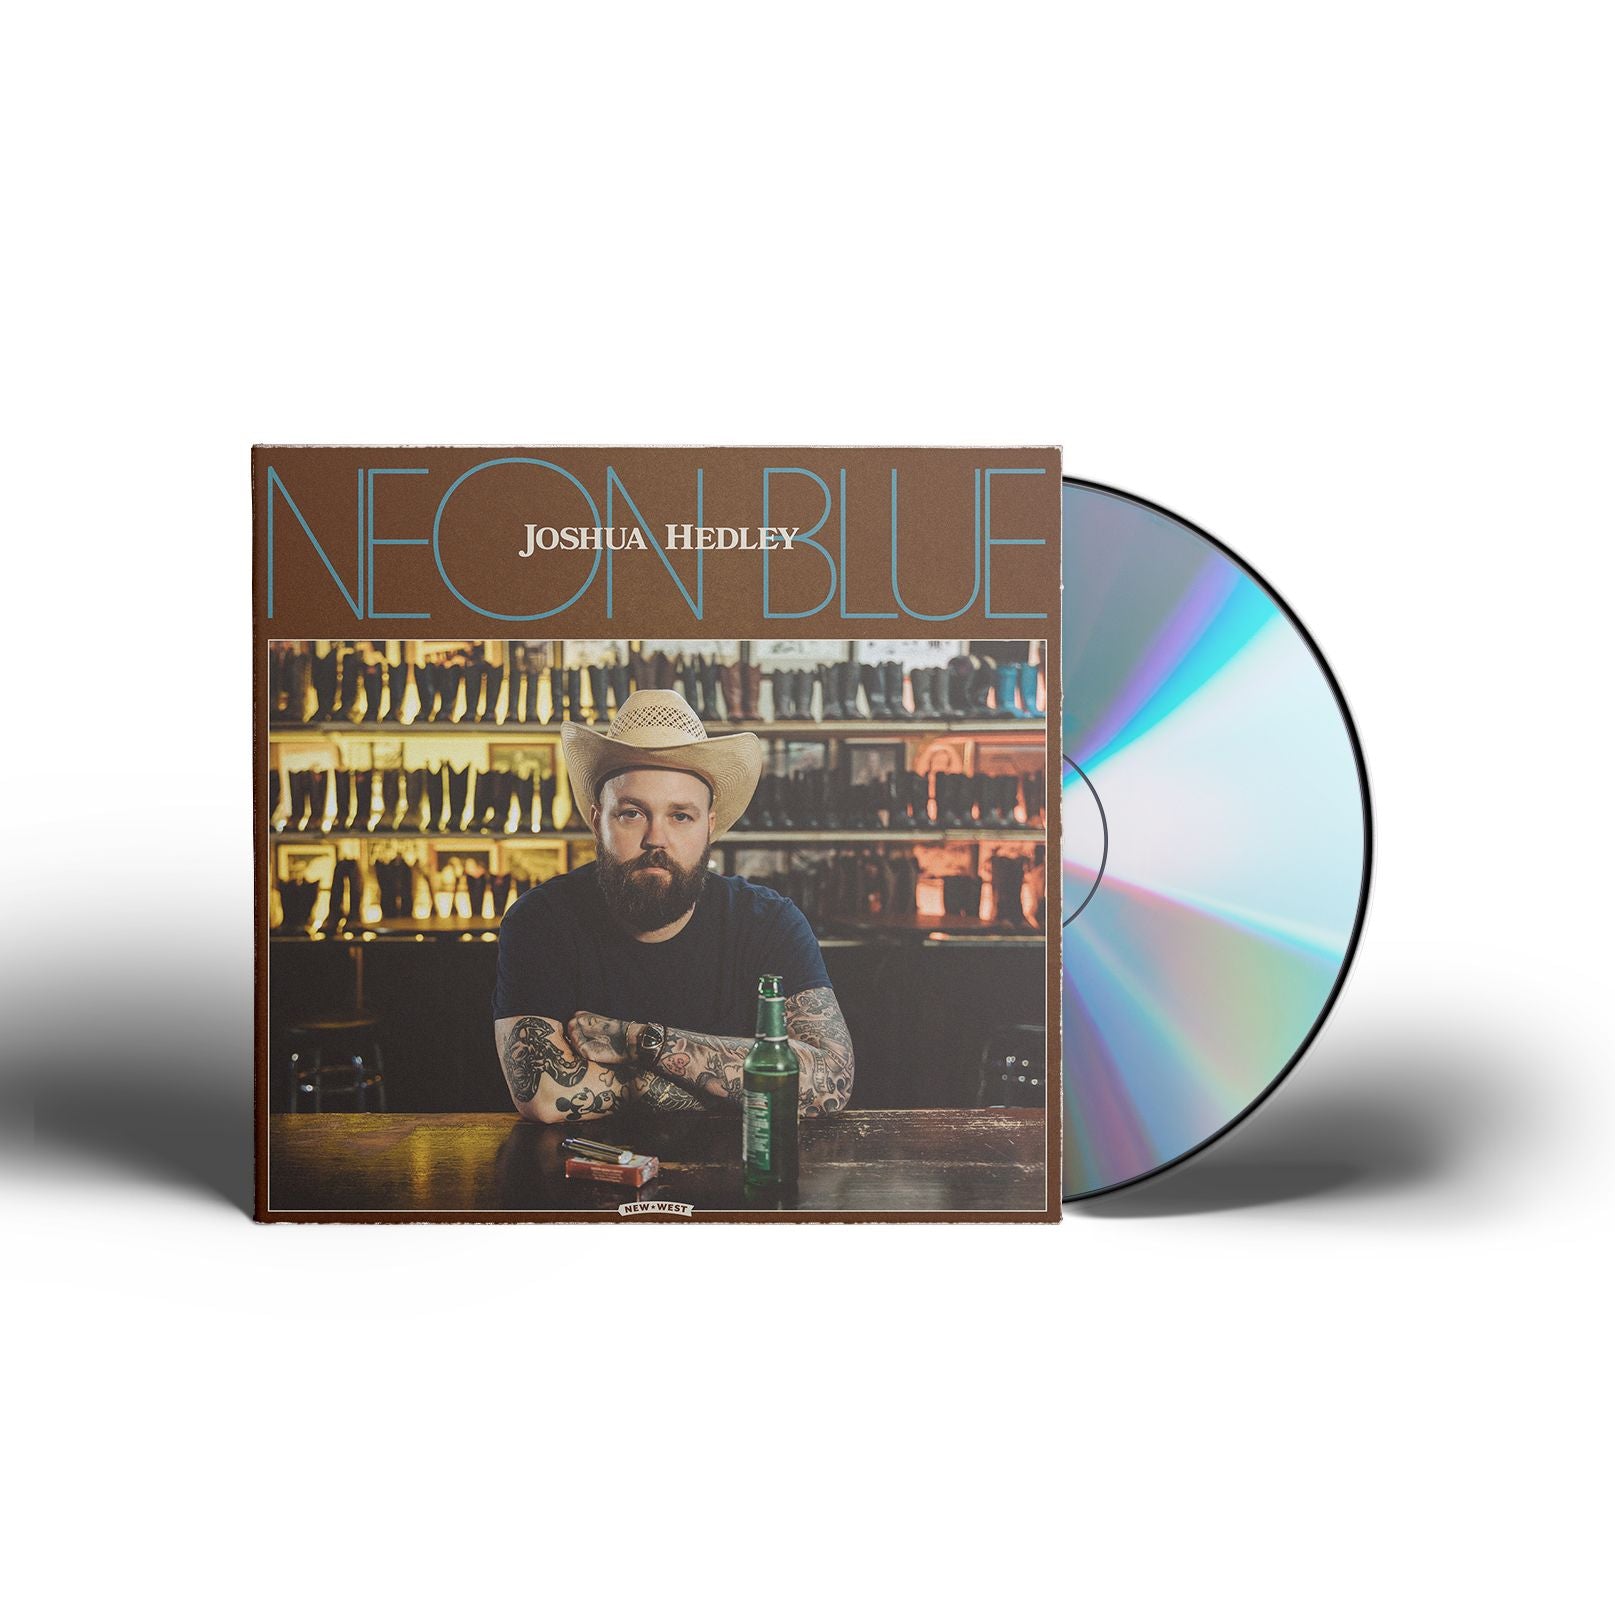 Joshua Hedley - Neon Blue [CD]